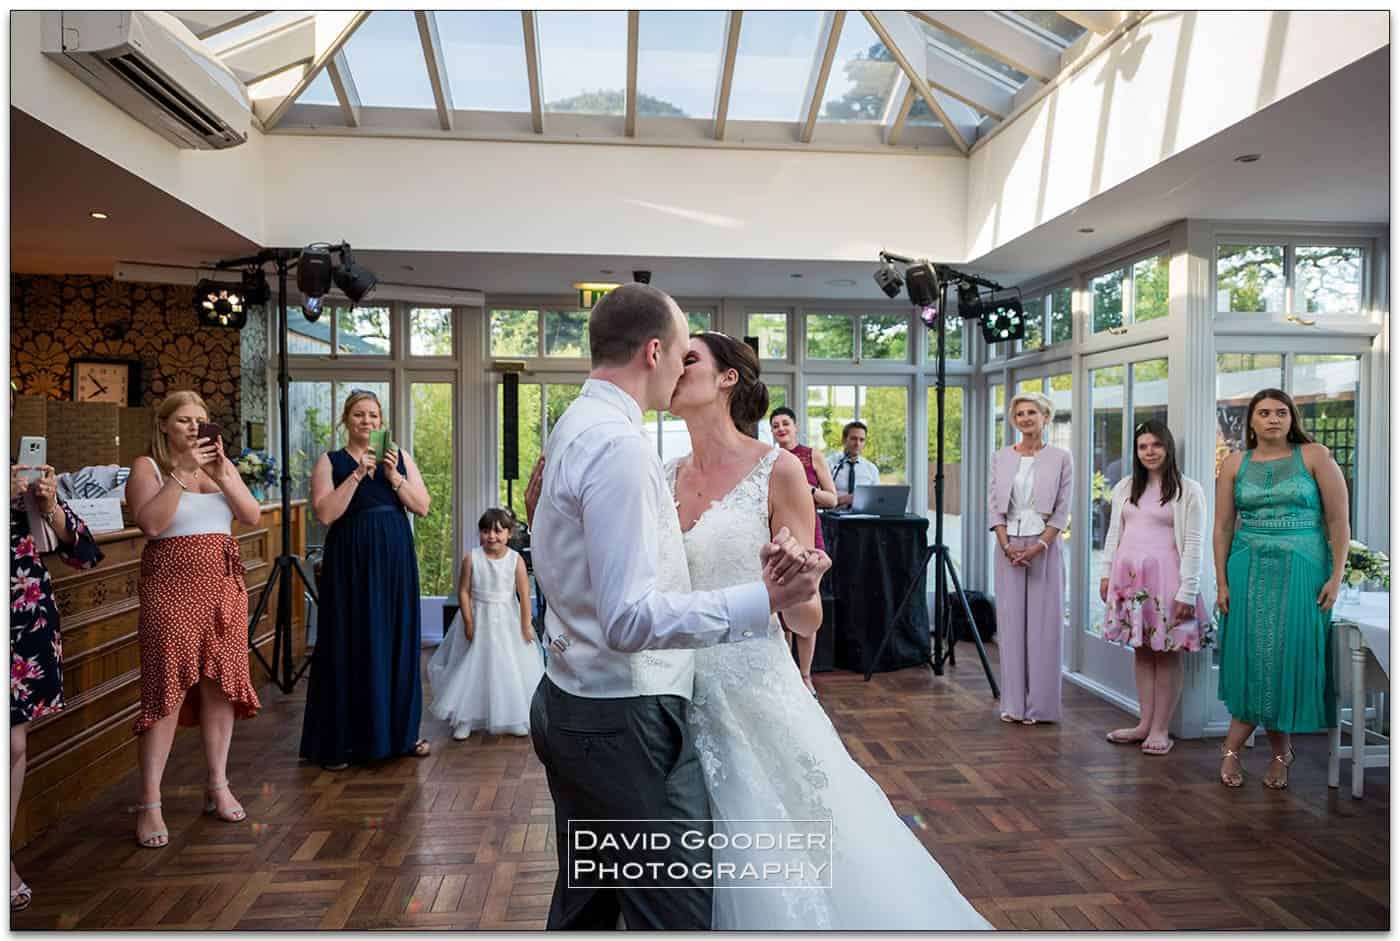 Wedding Venues Lake District | Broadoaks Wedding Gallery & Virtual Tour